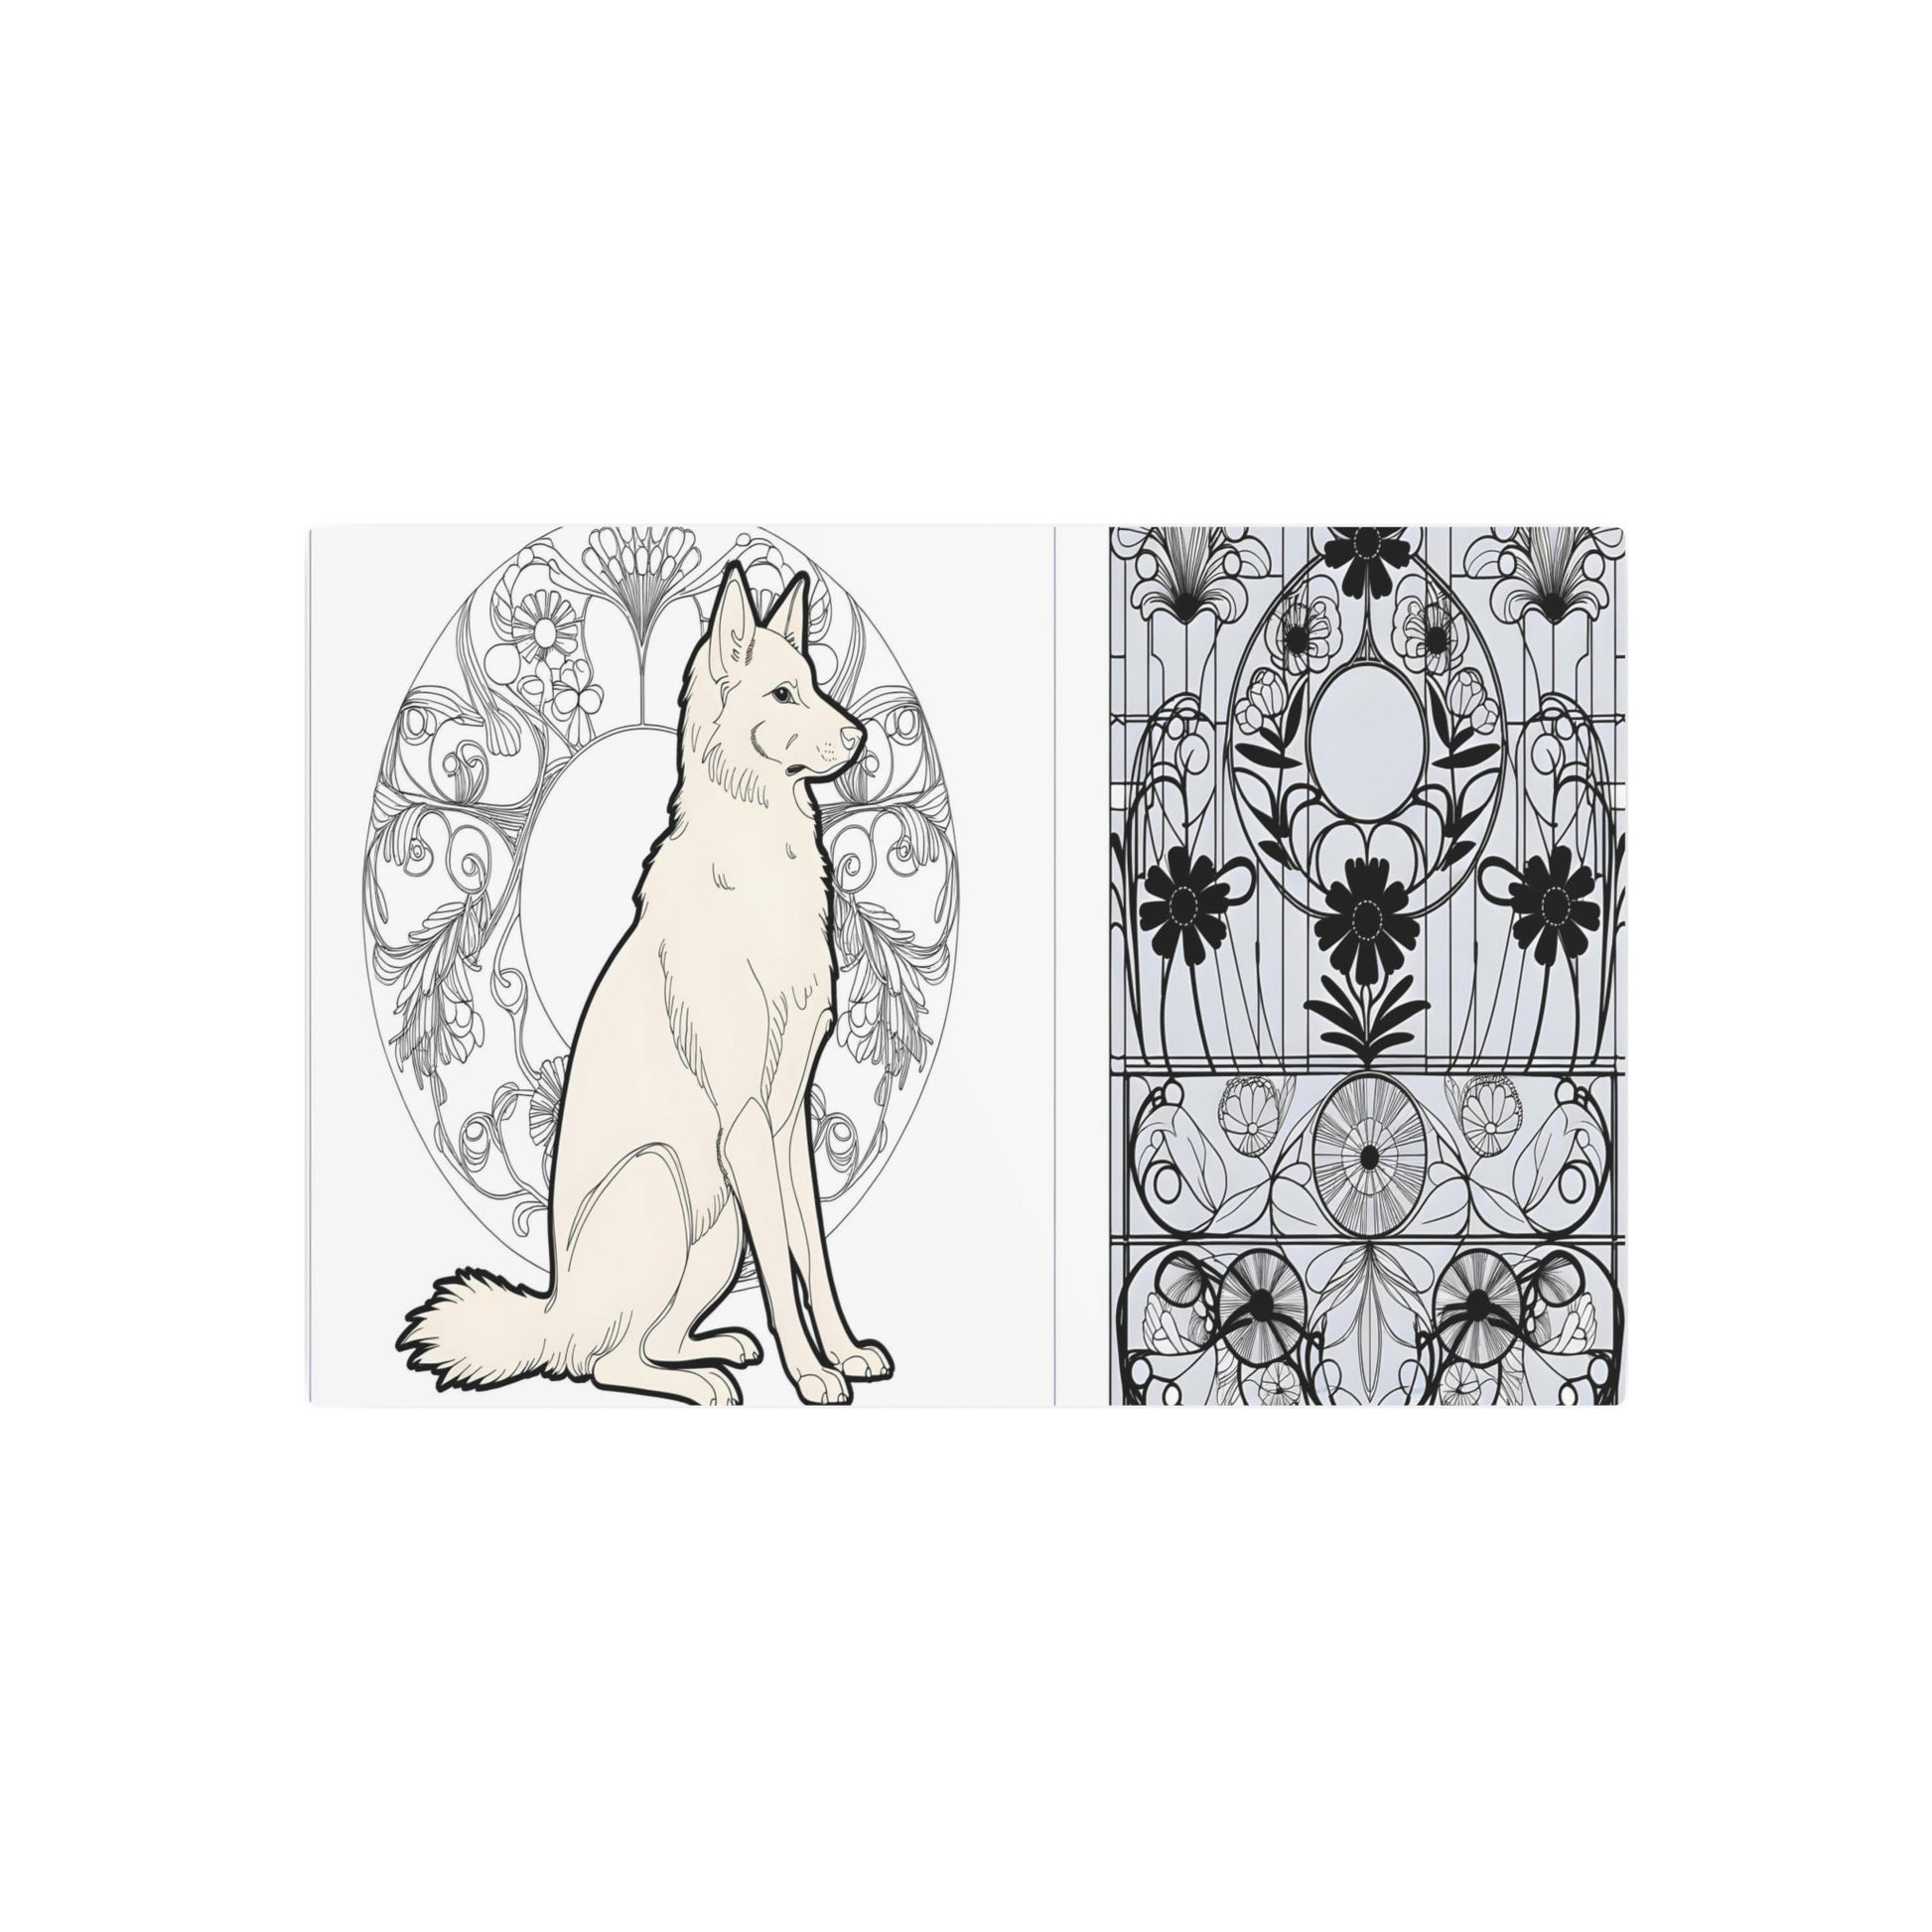 Metal Poster Art | "Art Nouveau Inspired Dog Illustration with Elegant Botanical Motifs - Late 19th & Early 20th Century Western Art Styles" - Metal Poster Art 30″ x 20″ (Horizontal) 0.12''